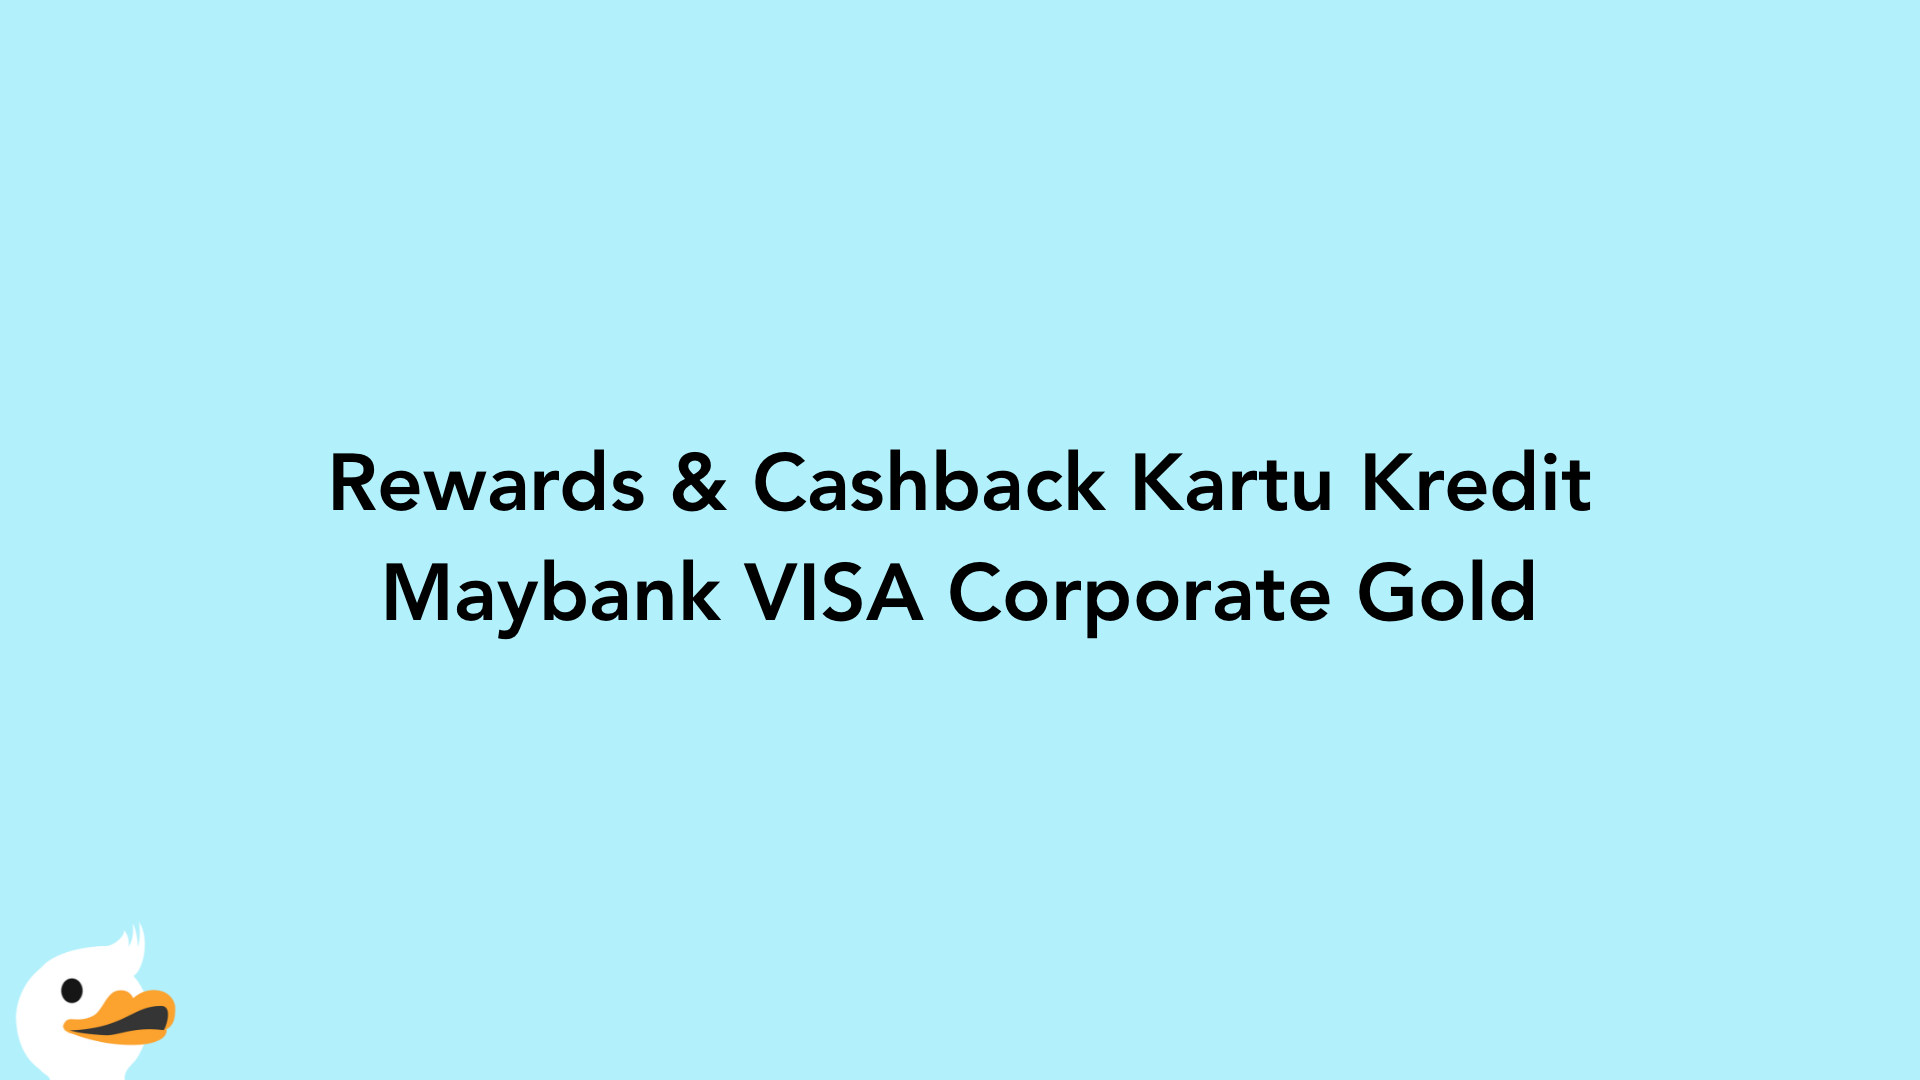 Rewards & Cashback Kartu Kredit Maybank VISA Corporate Gold